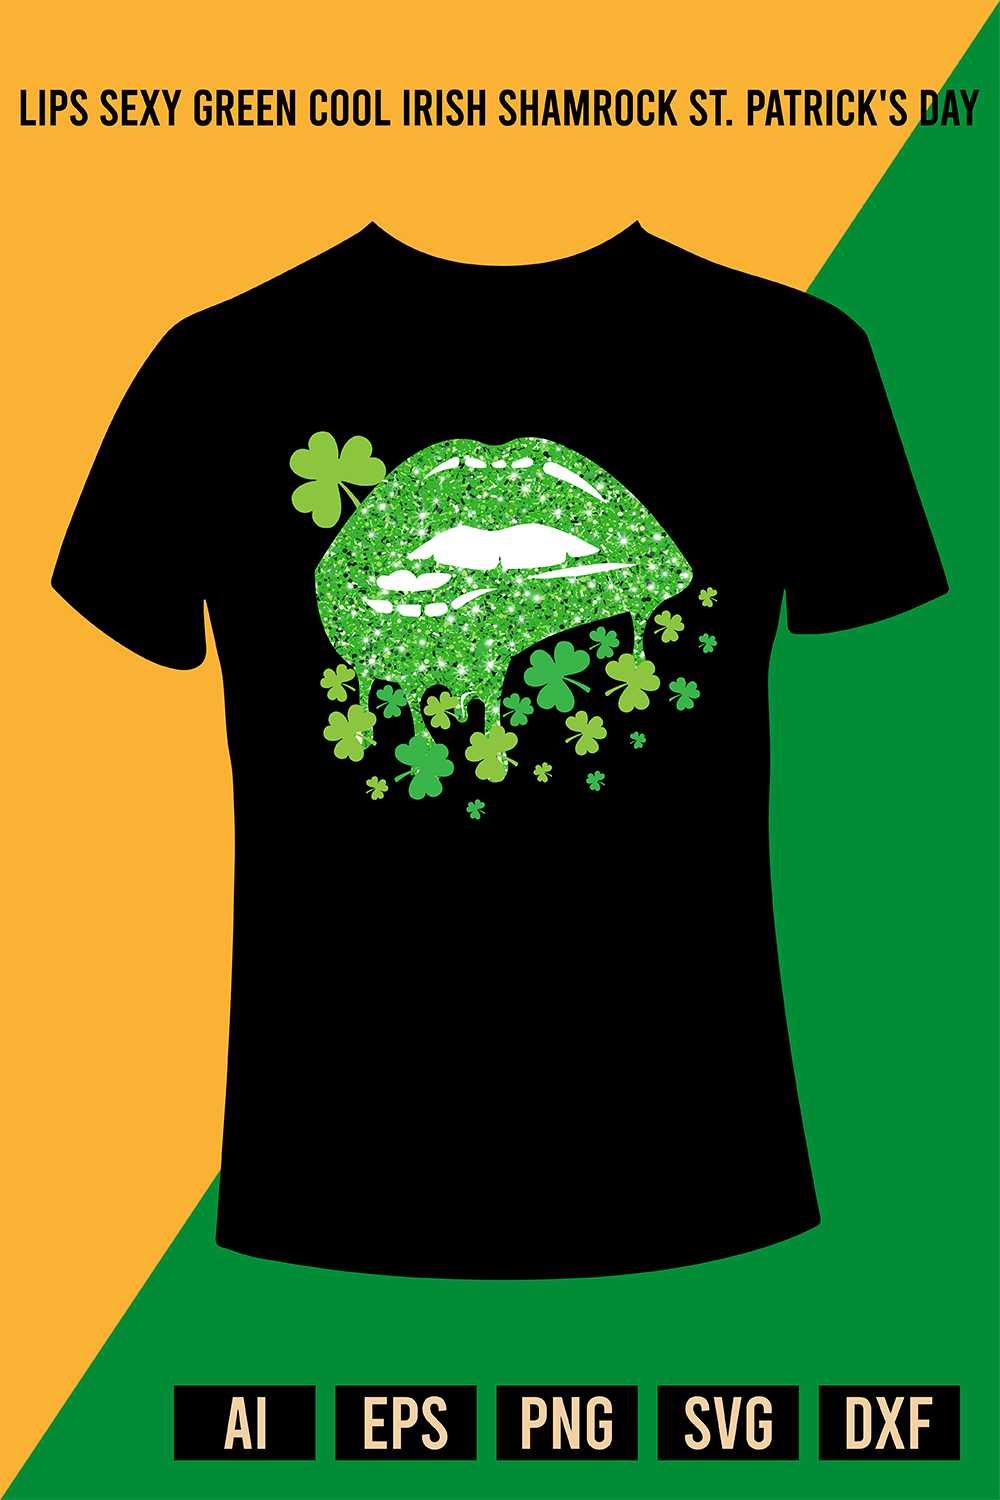 Lips Sexy Green Cool Irish Shamrock St Patrick's Day Shirt Design pinterest preview image.